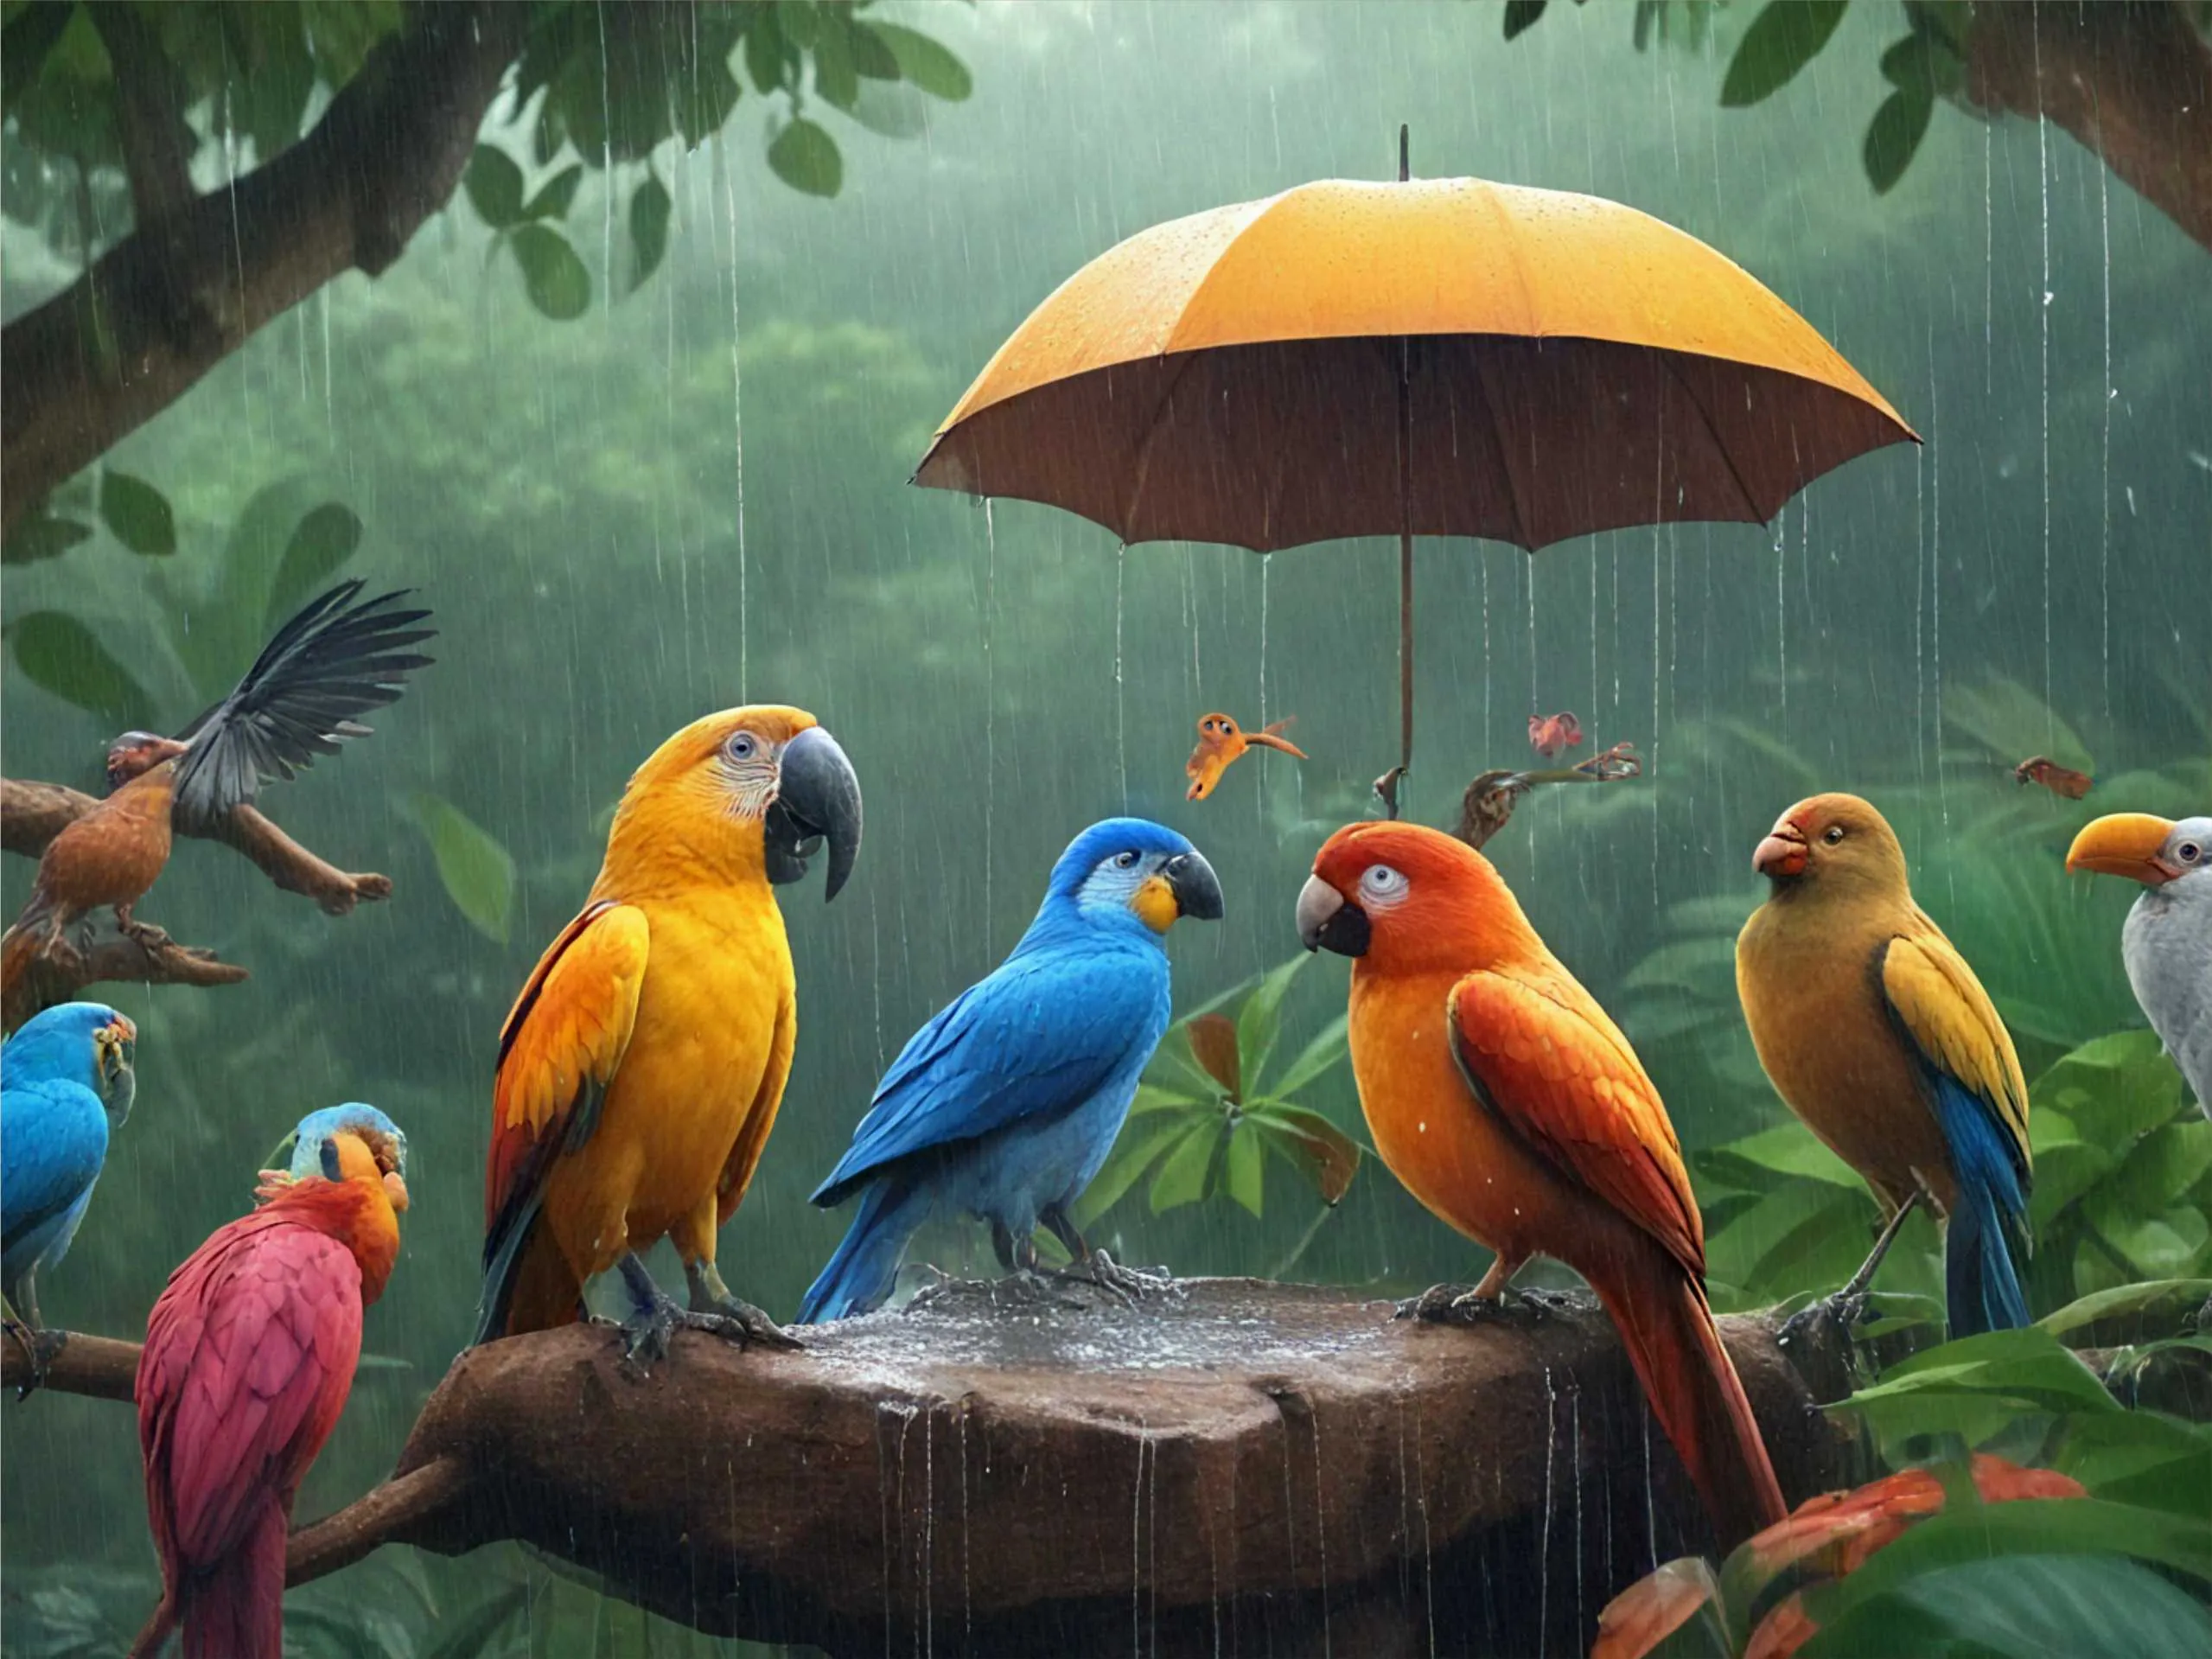 cartoon image of jungle birds in rain